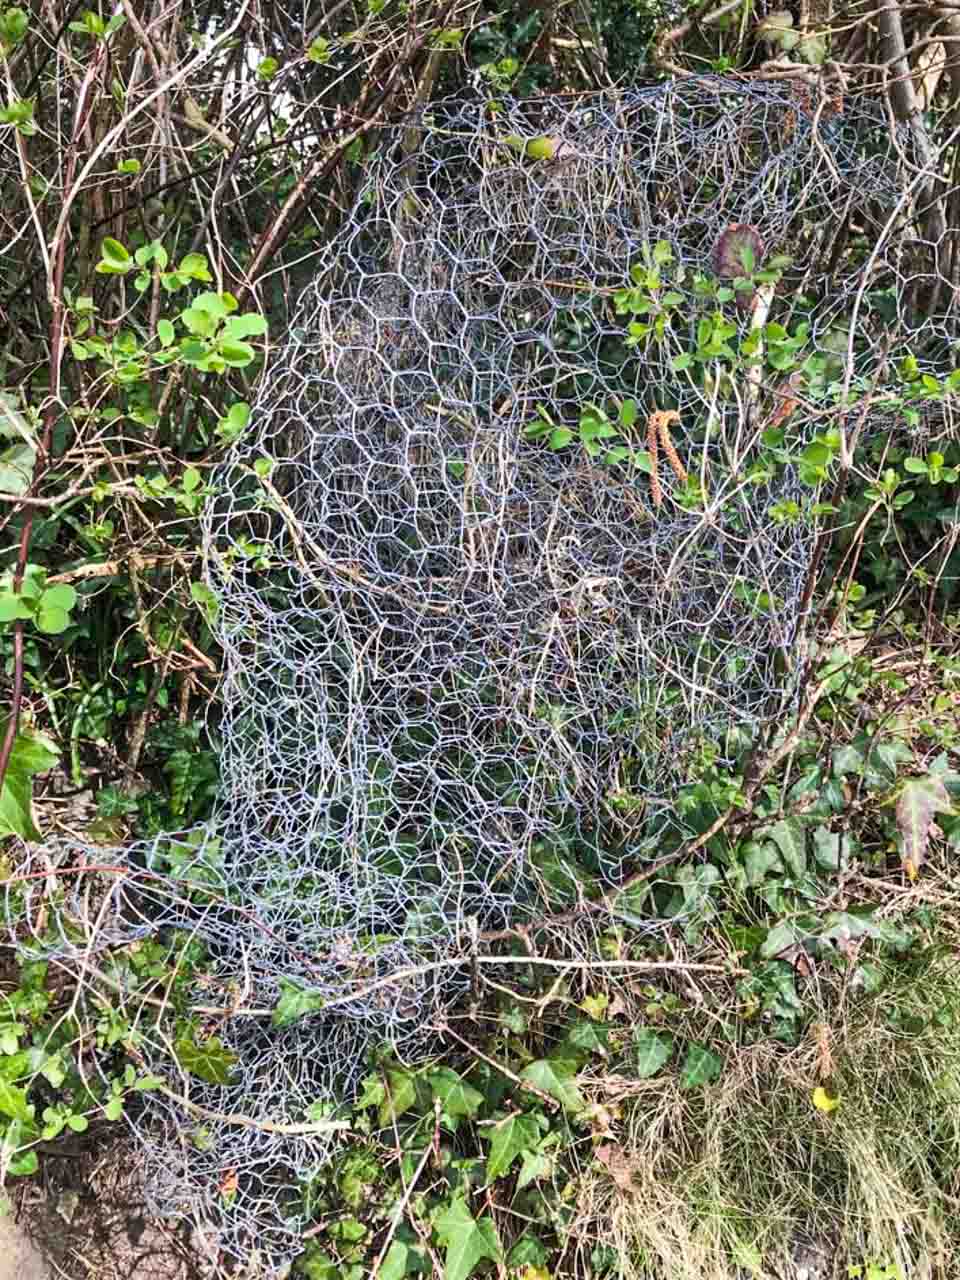 Litter pick 2022: Chicken wire thrown in a hedge